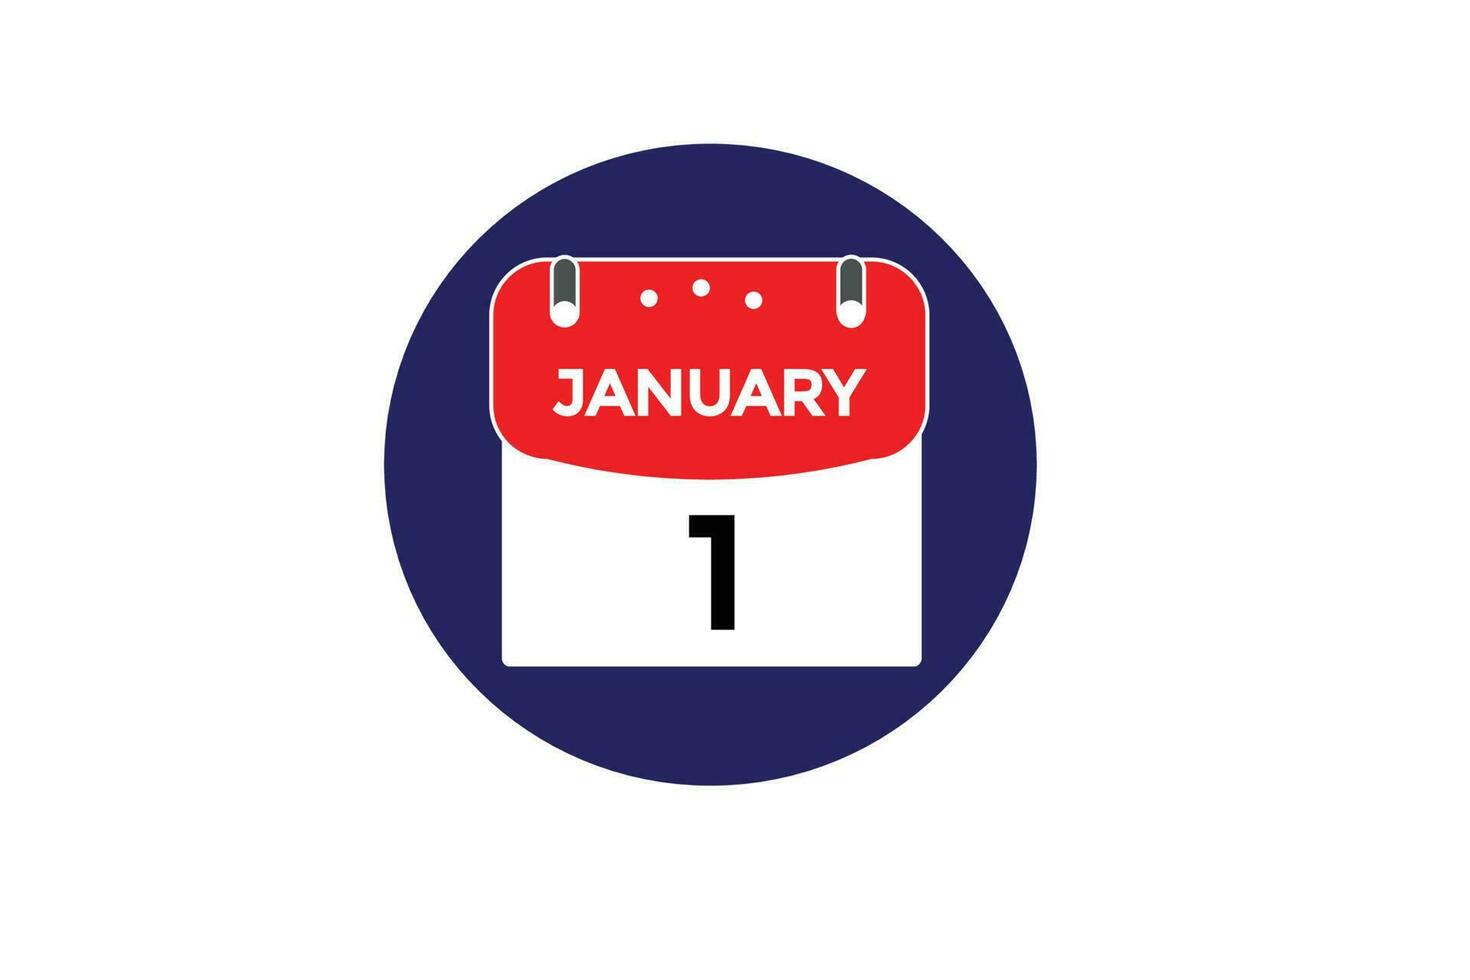 januari 1 kalender datum påminnelse, kalender 1 januari datum mall vektor